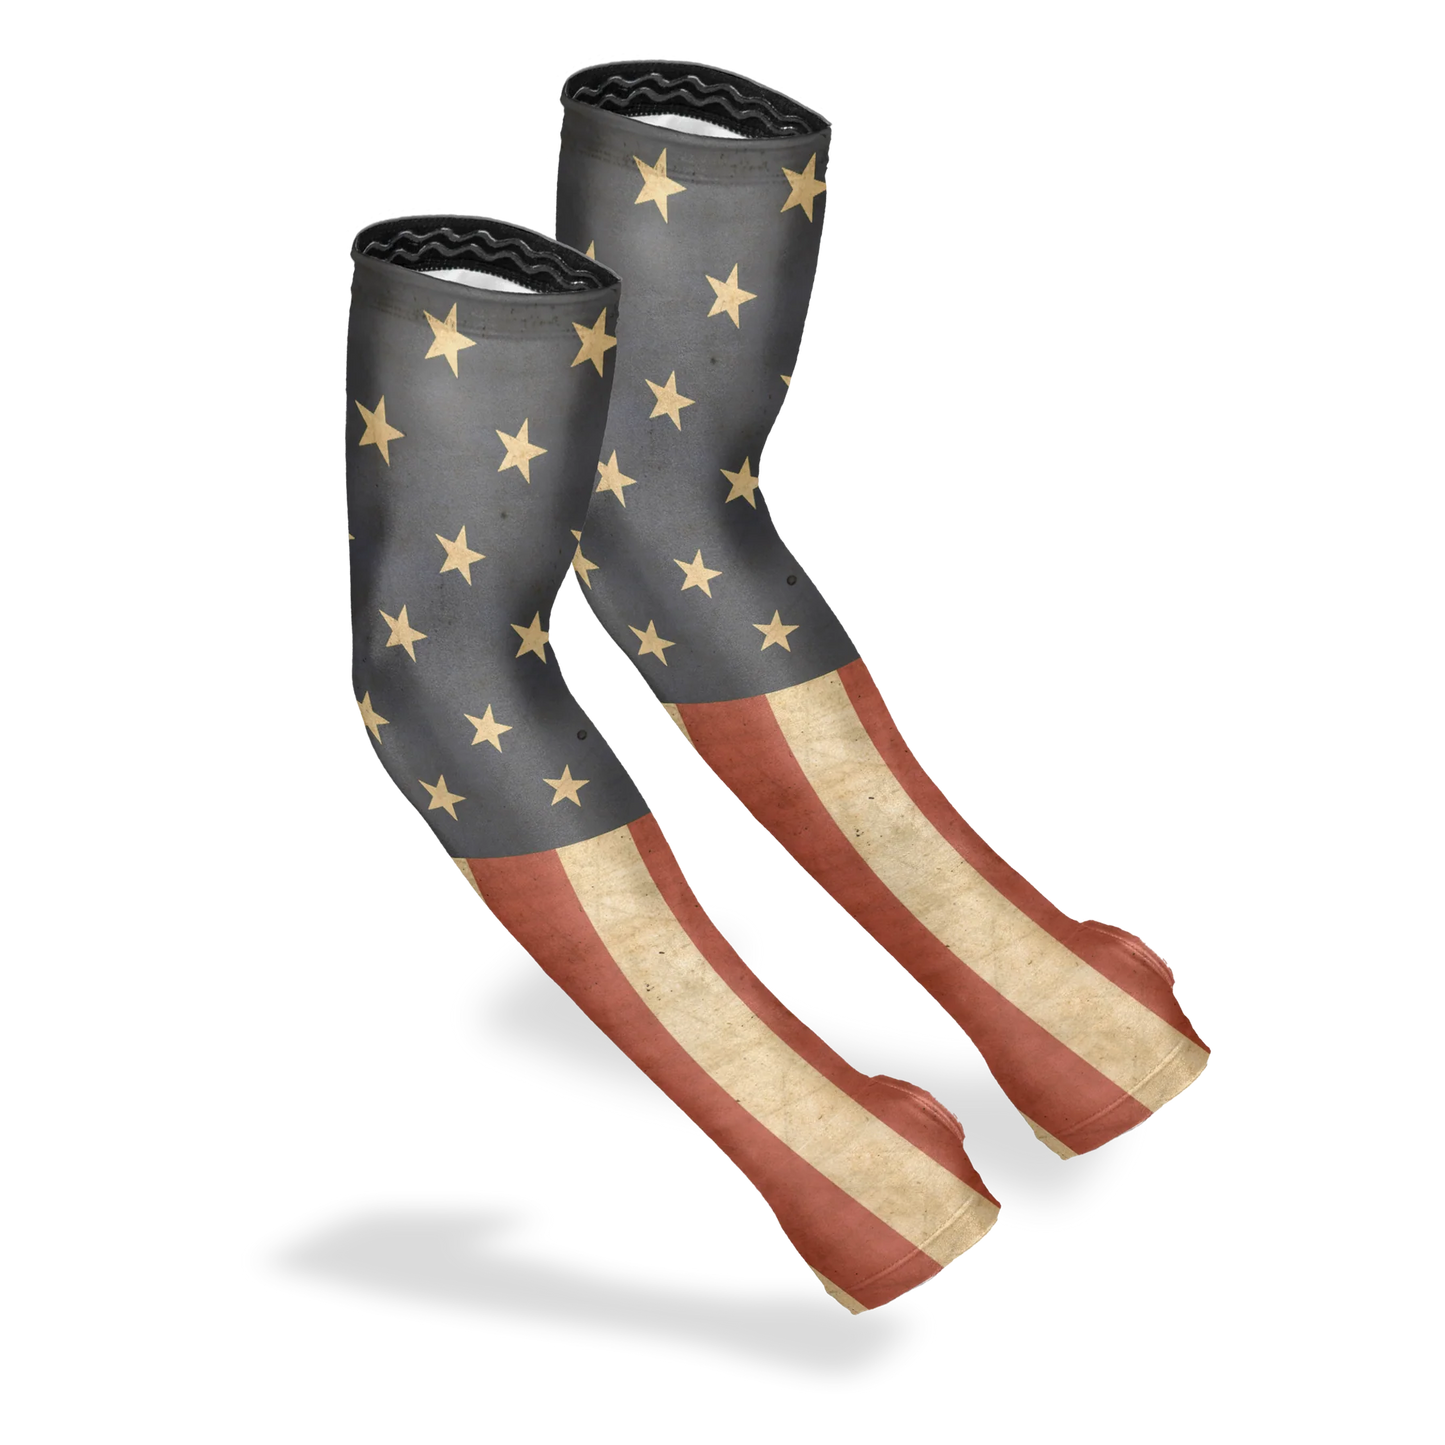 Patriotic American flag design on protective gardening leg warmers